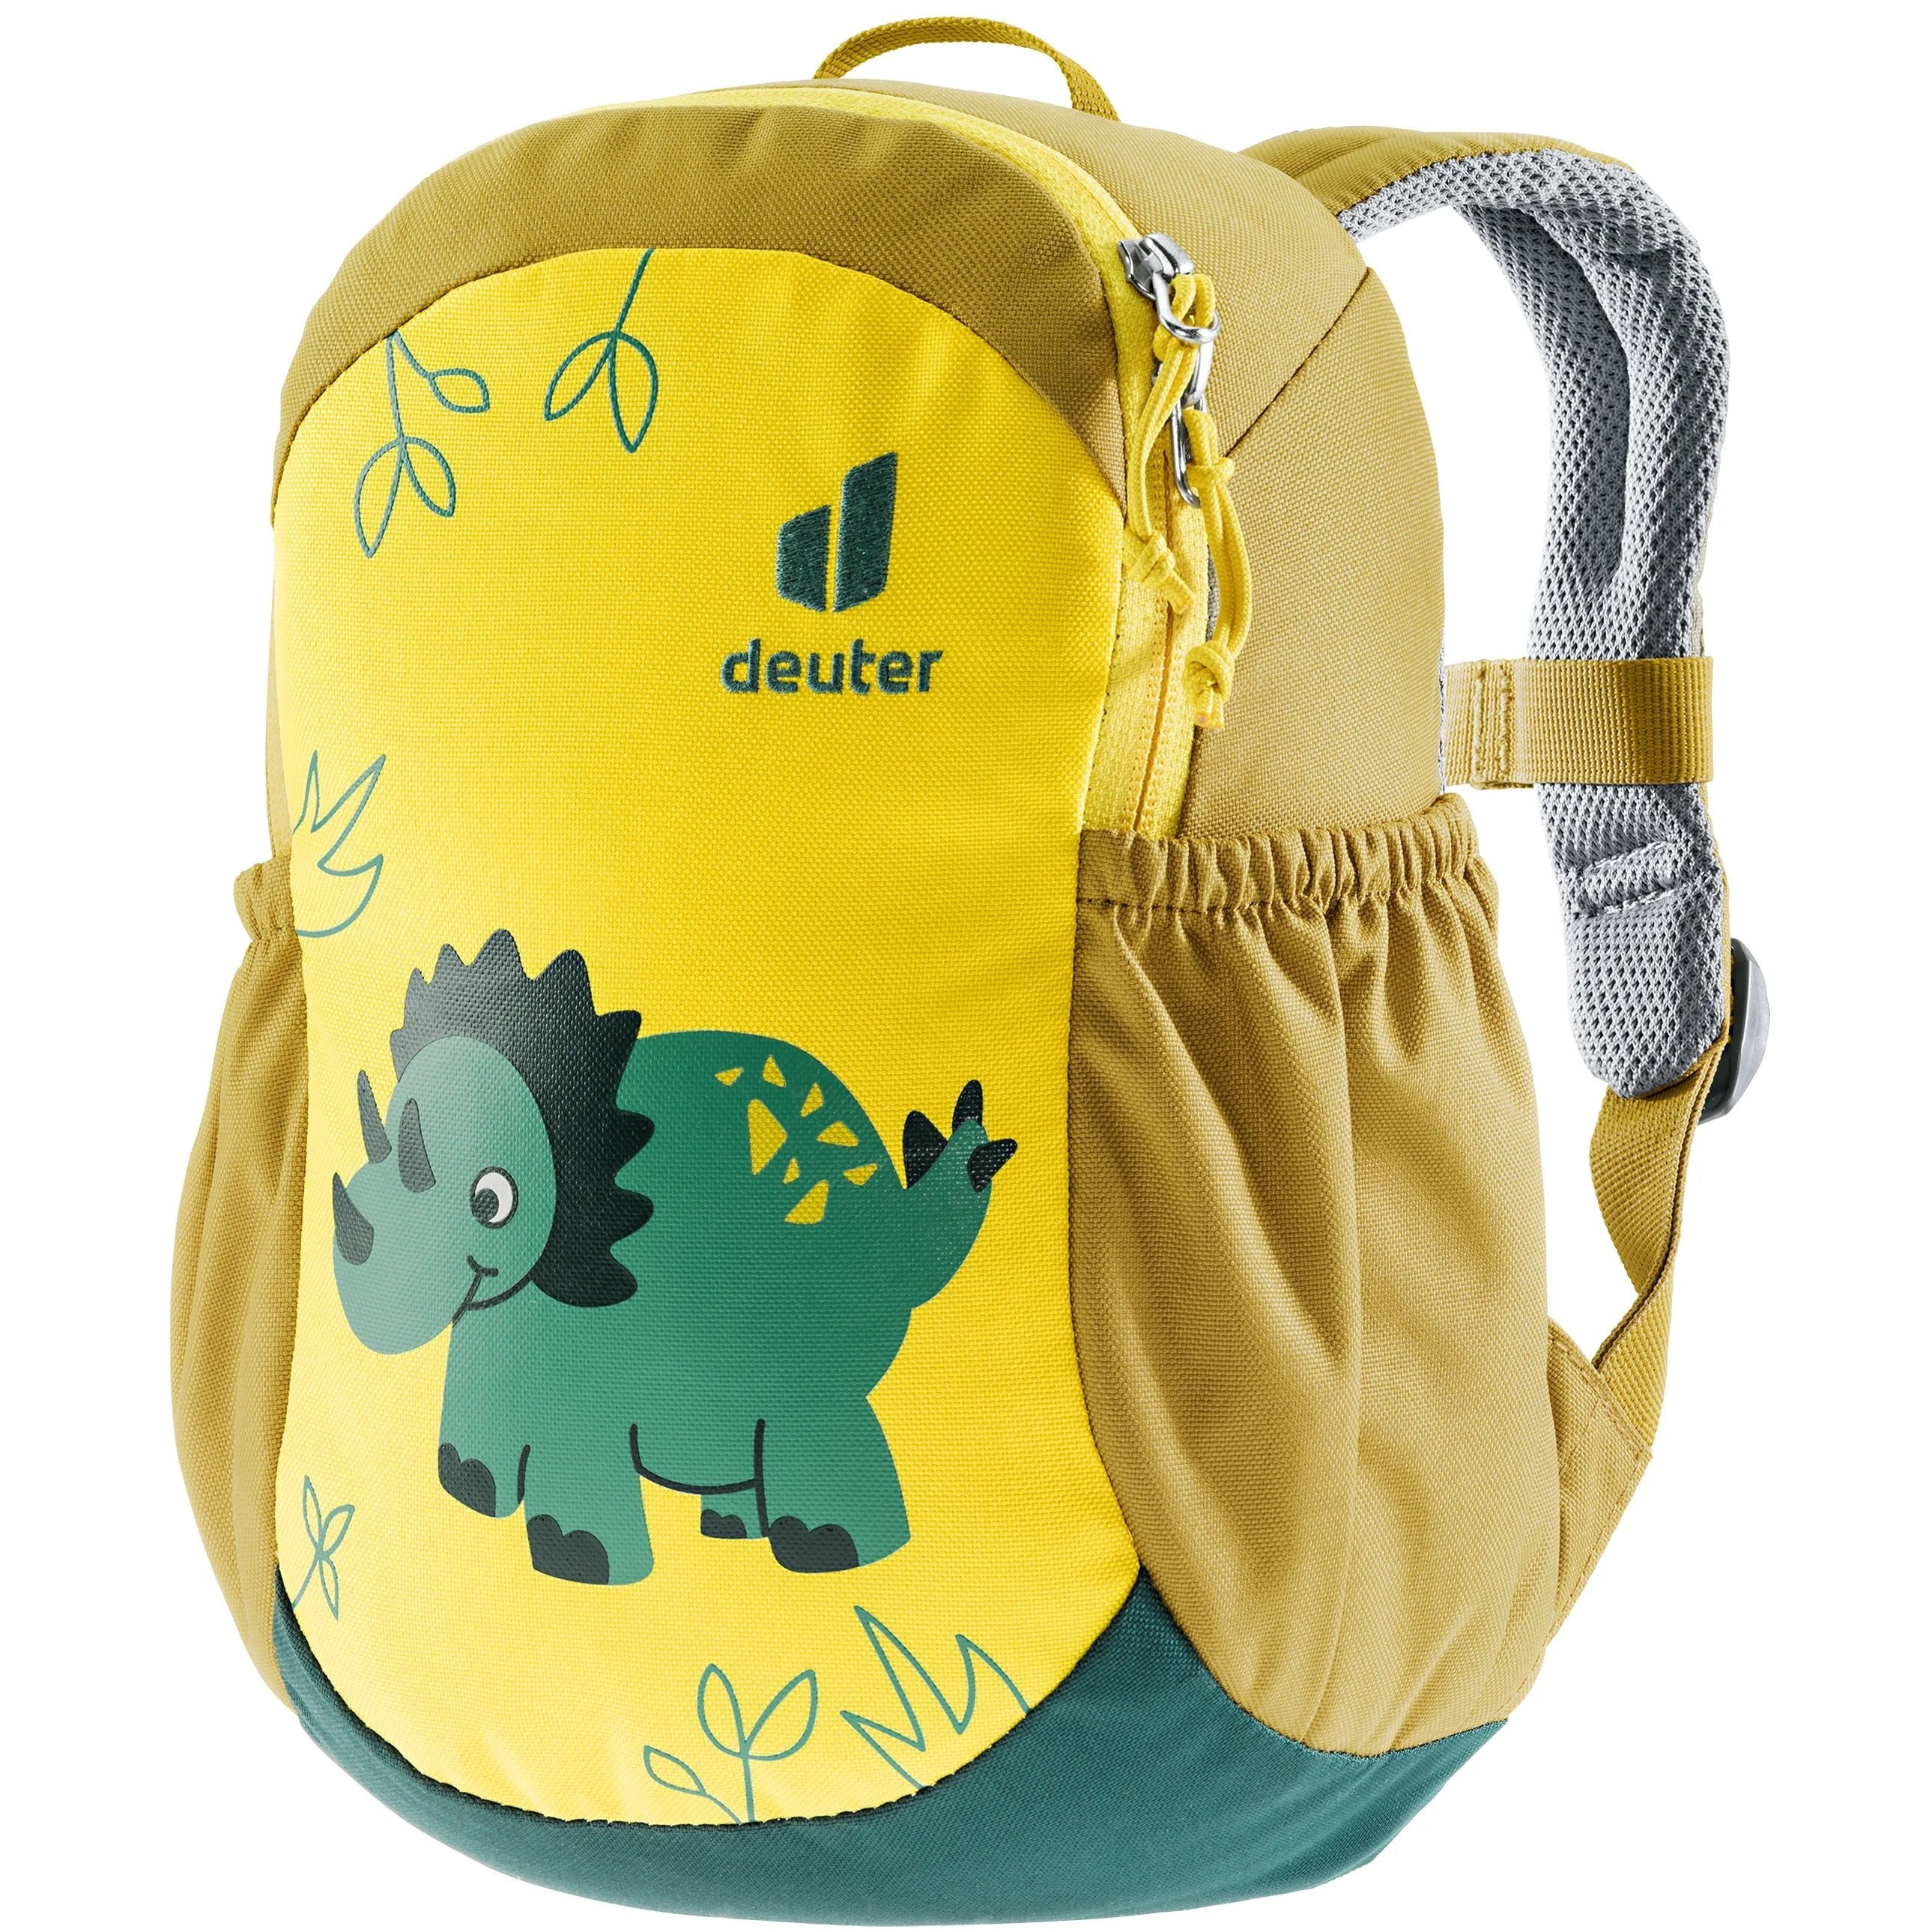 Deuter Daypack Family Pico sac à dos enfant 28 cm - maïs-curcuma